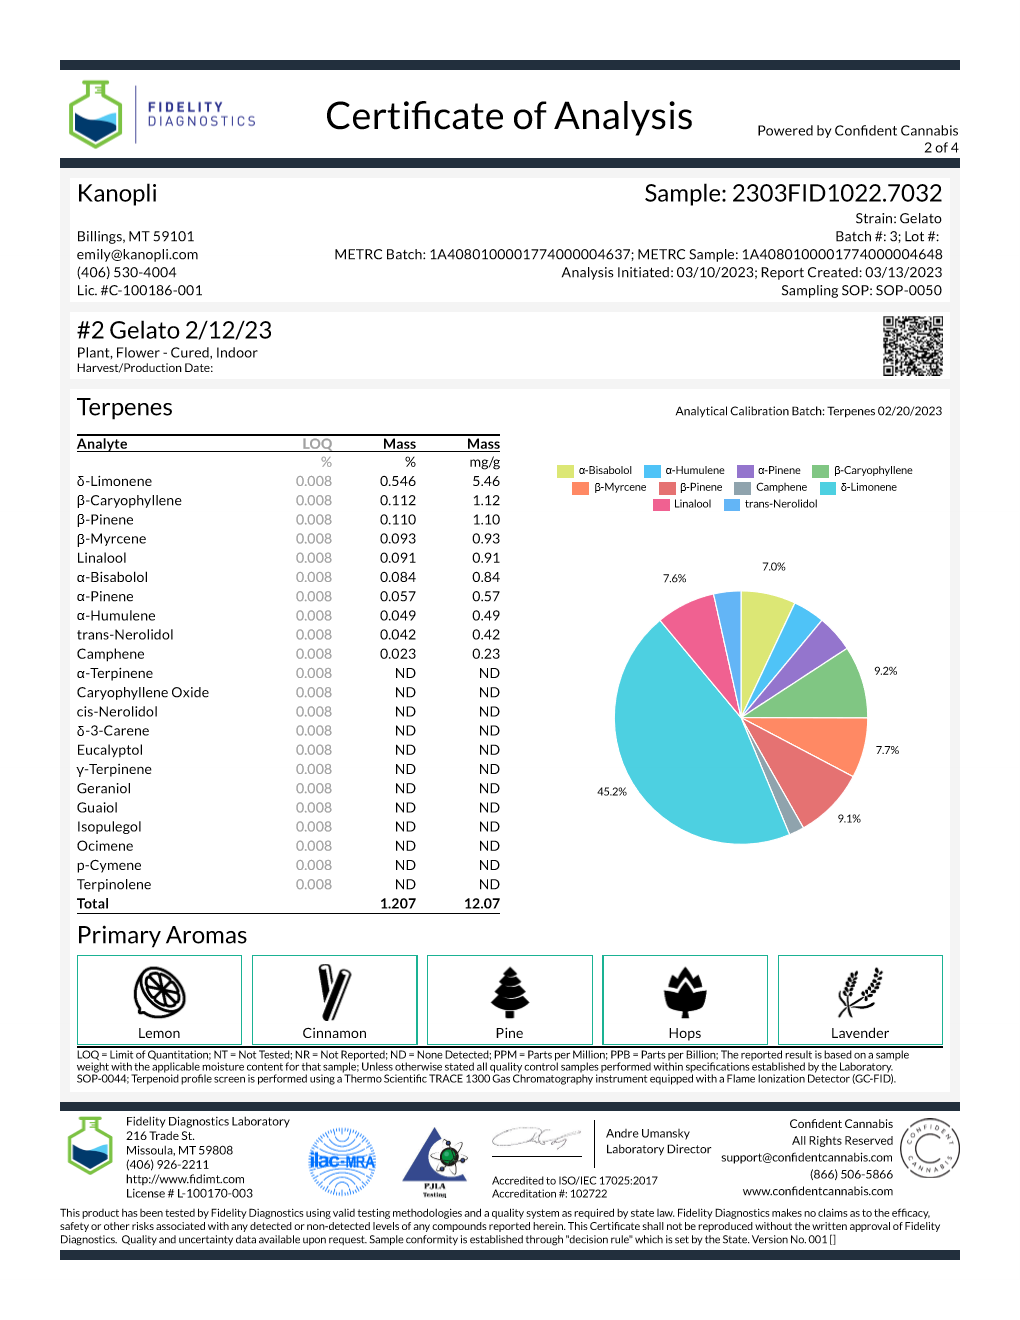 Gelato #2- Hybrid 21% THC (Feb. 2023) MEDICAL